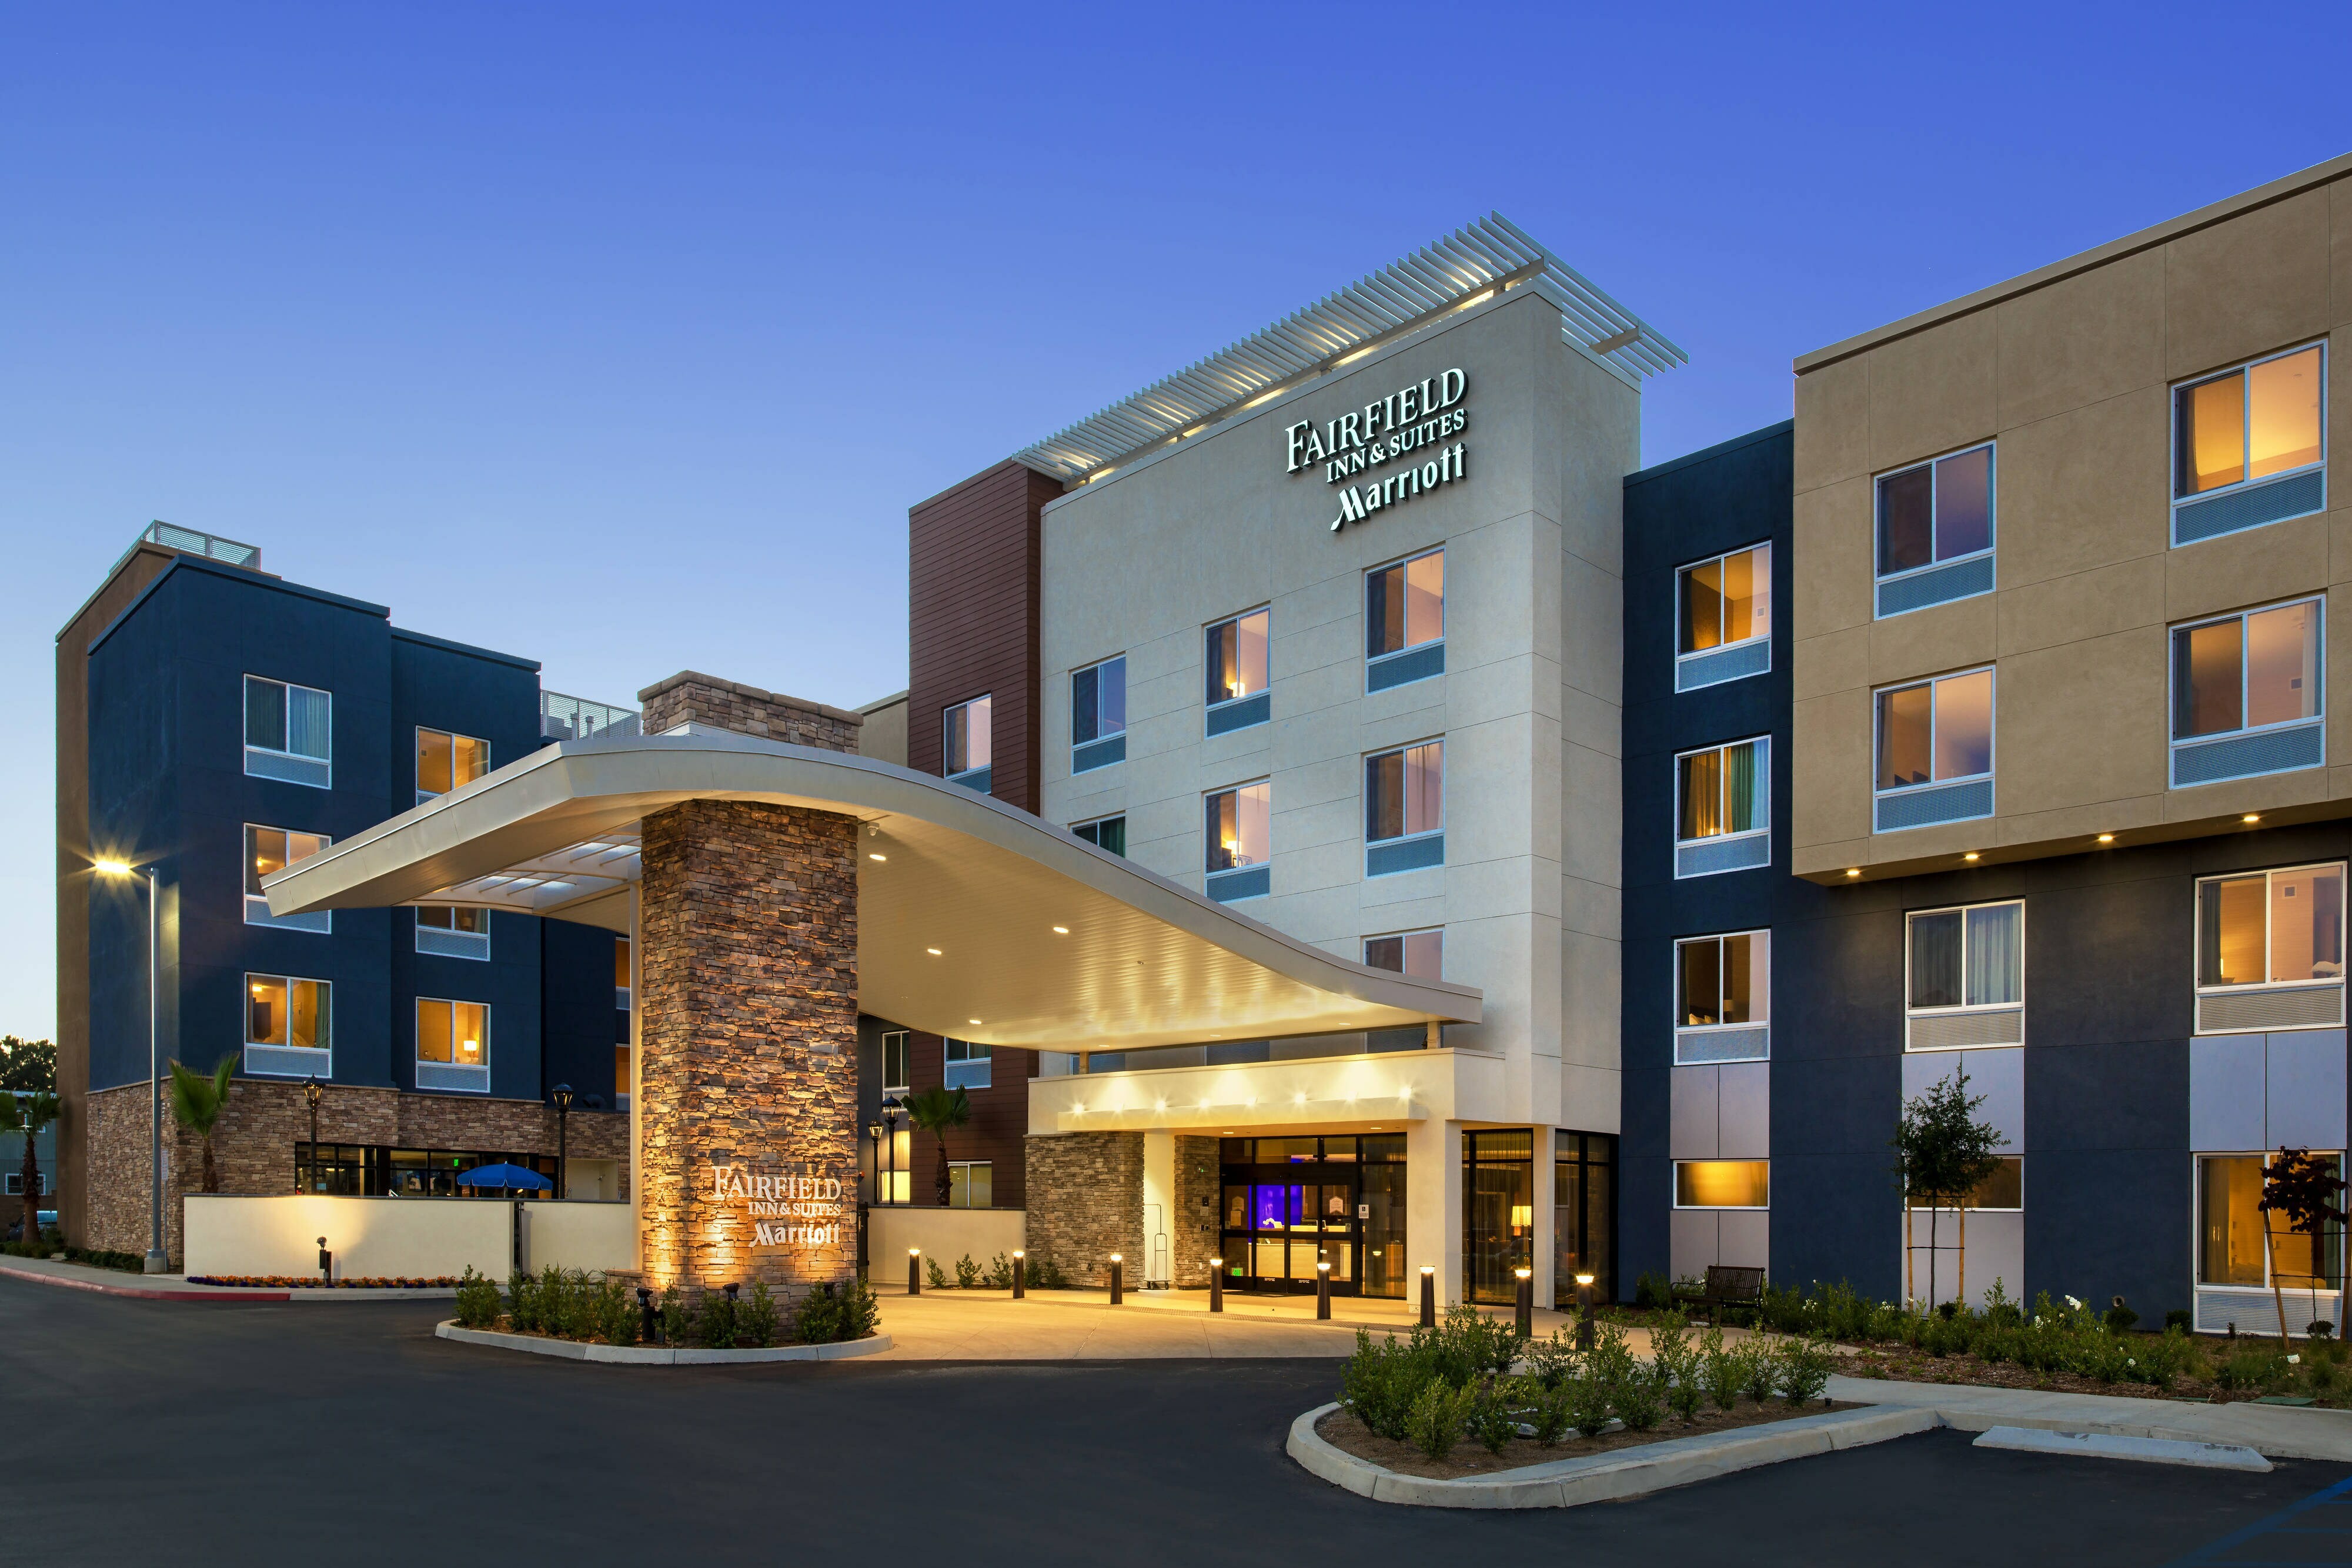 Photo of Fairfield Inn & Suites San Diego North/San Marcos, San Marcos, CA